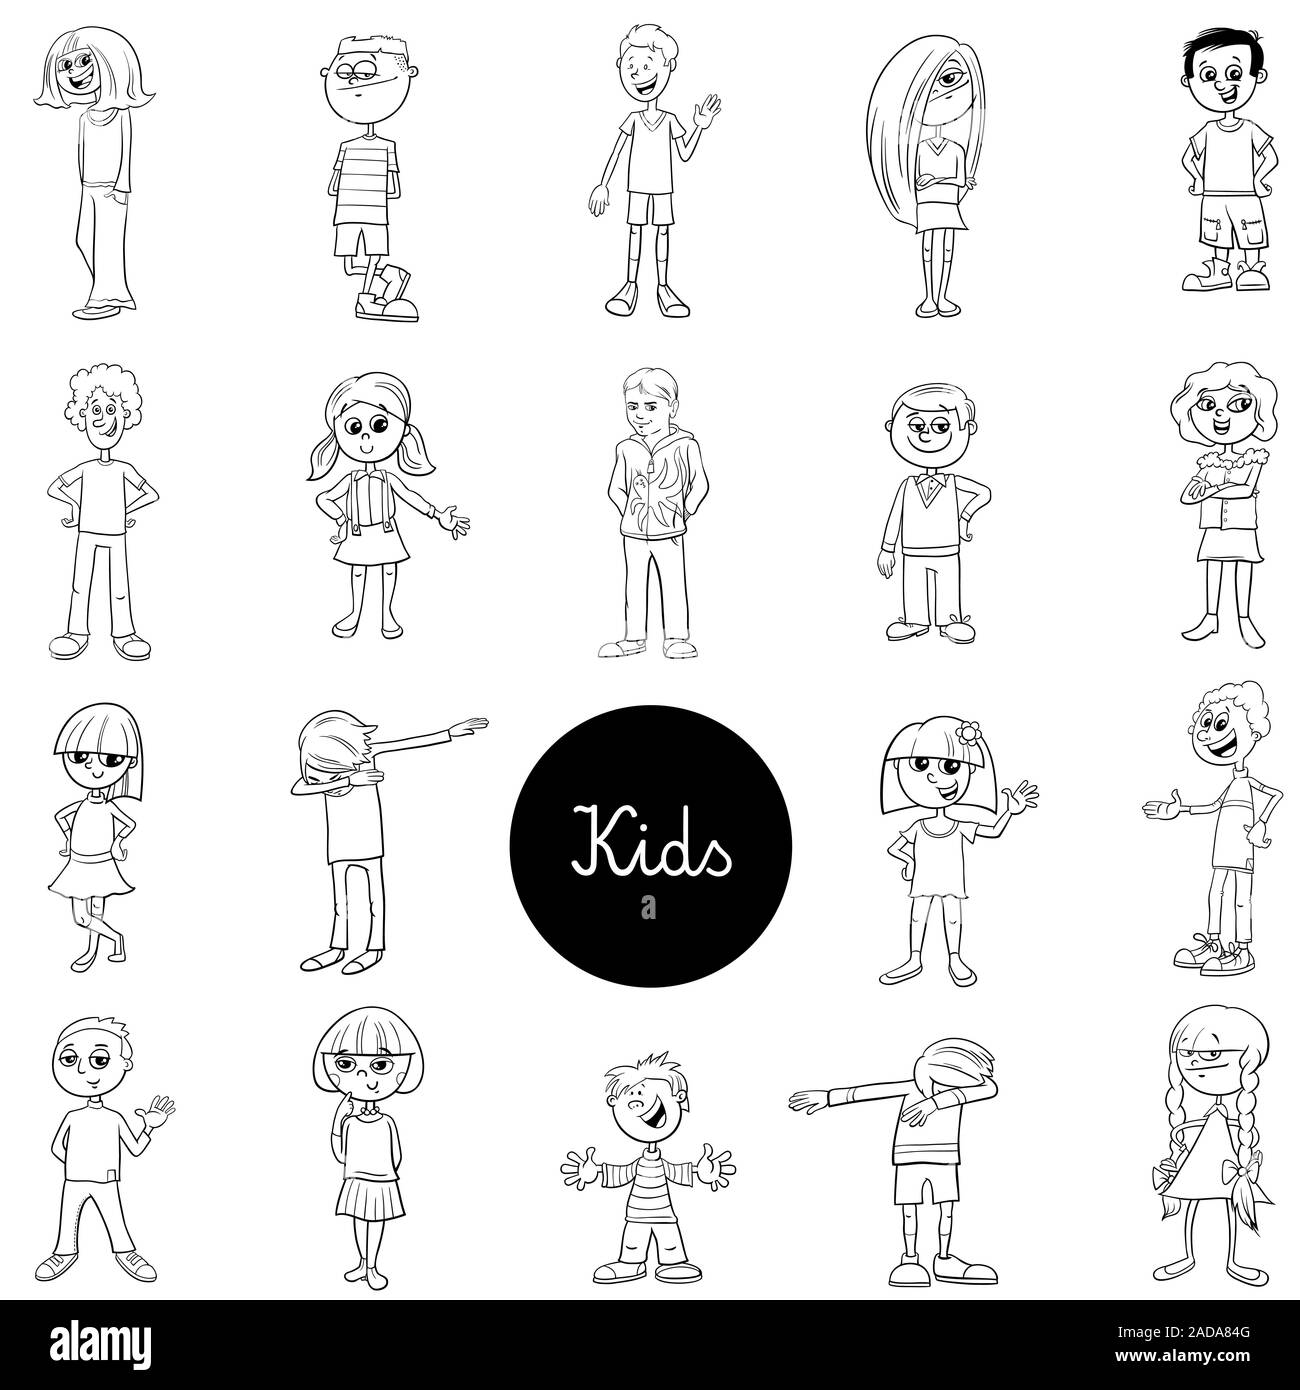 comic children characters black and white set Stock Photo